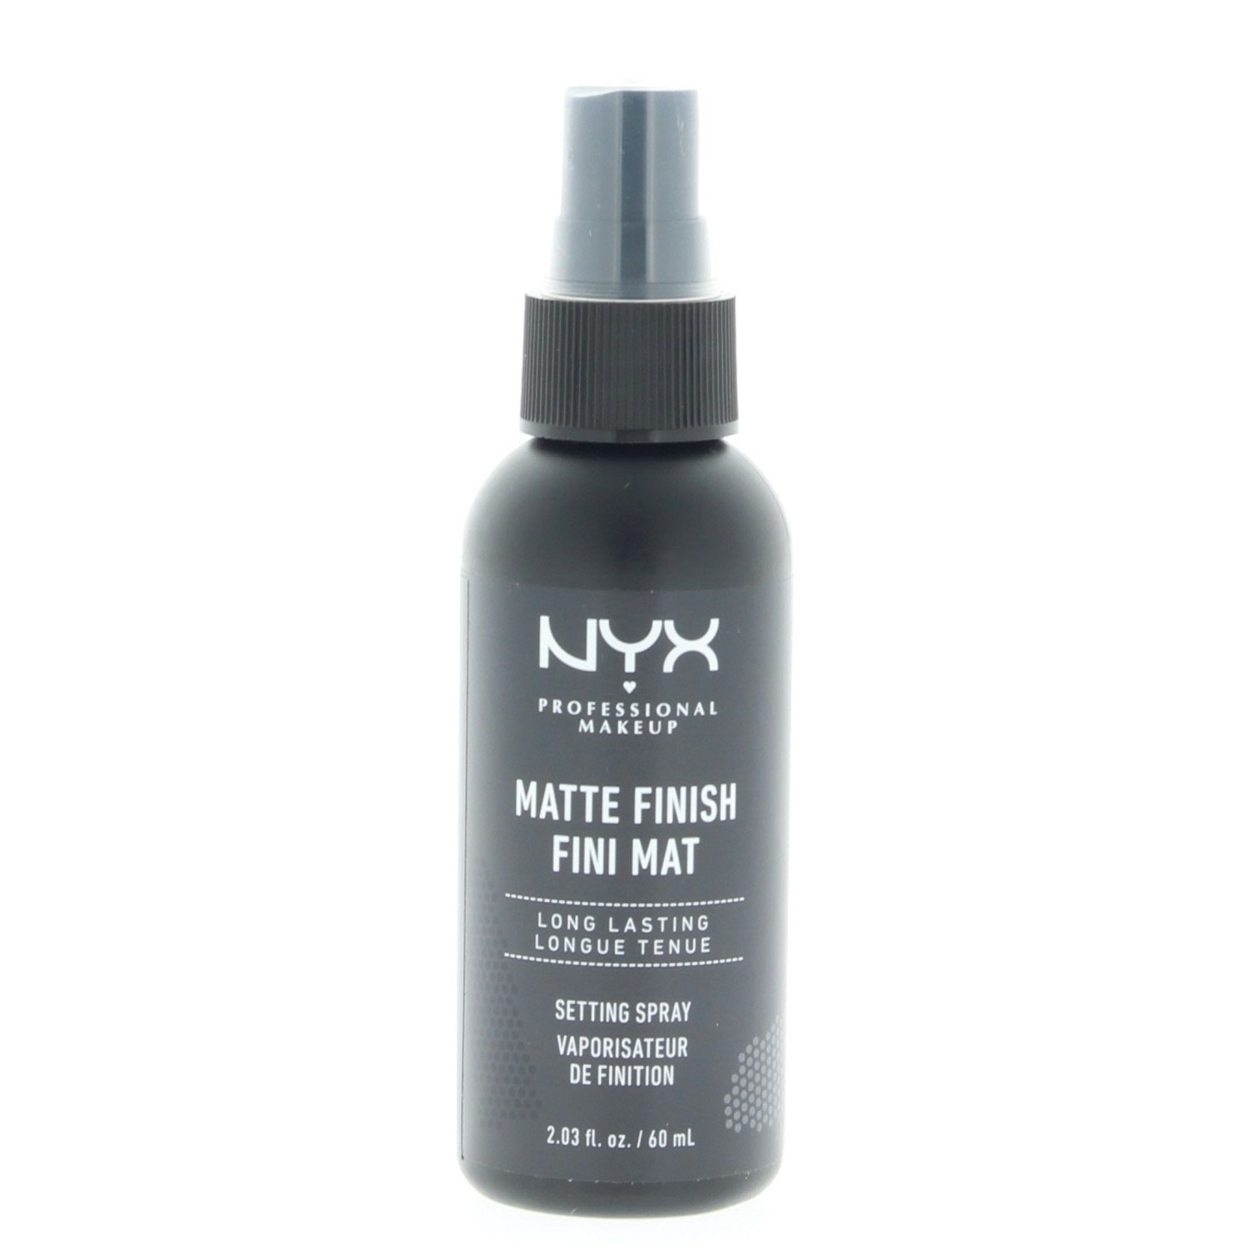 NYX Professional Makeup Matte Finish Makeup Setting Spray 2.03oz/60ml